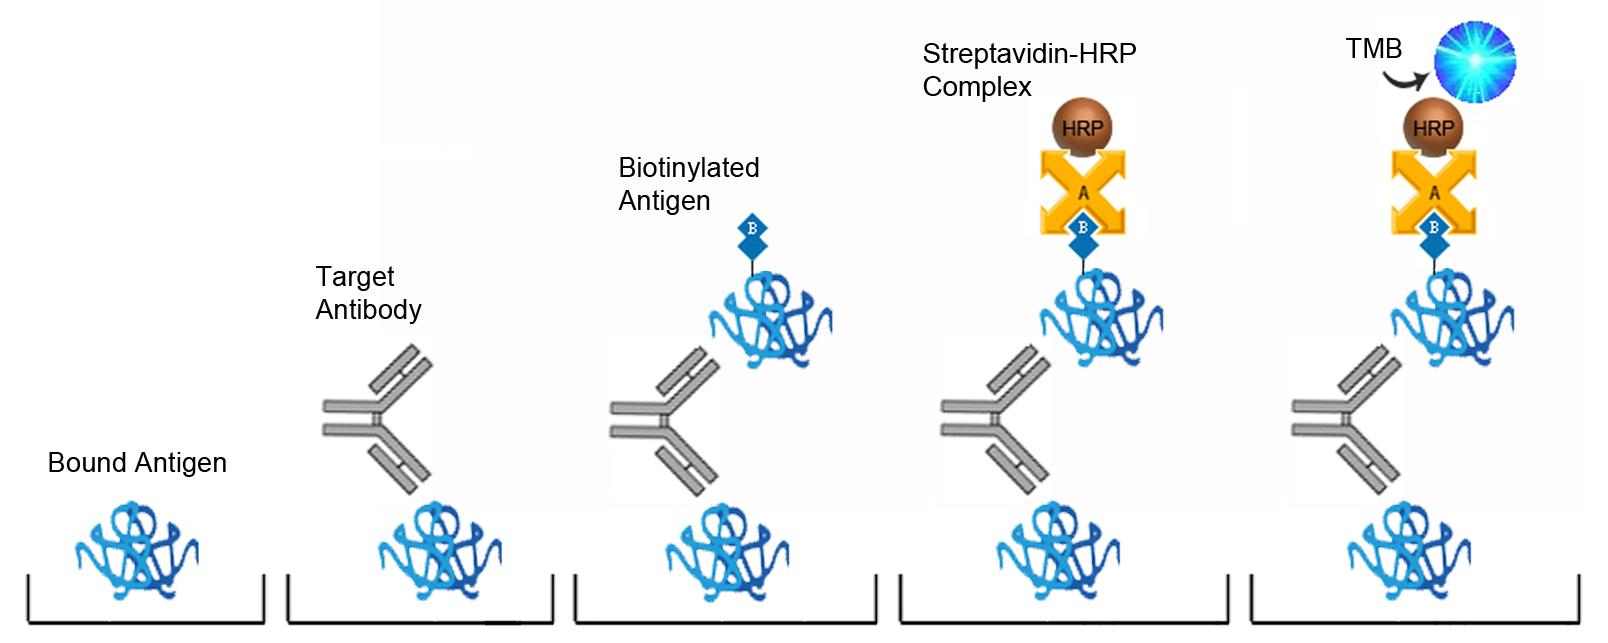 Anti Coronavirus SARS-CoV-2 Nucleoprotein (N) Ig(All) ELISA Kit - Sandwich BoundAntigen SampleAb AntigenBiotin AvidHRP TMB